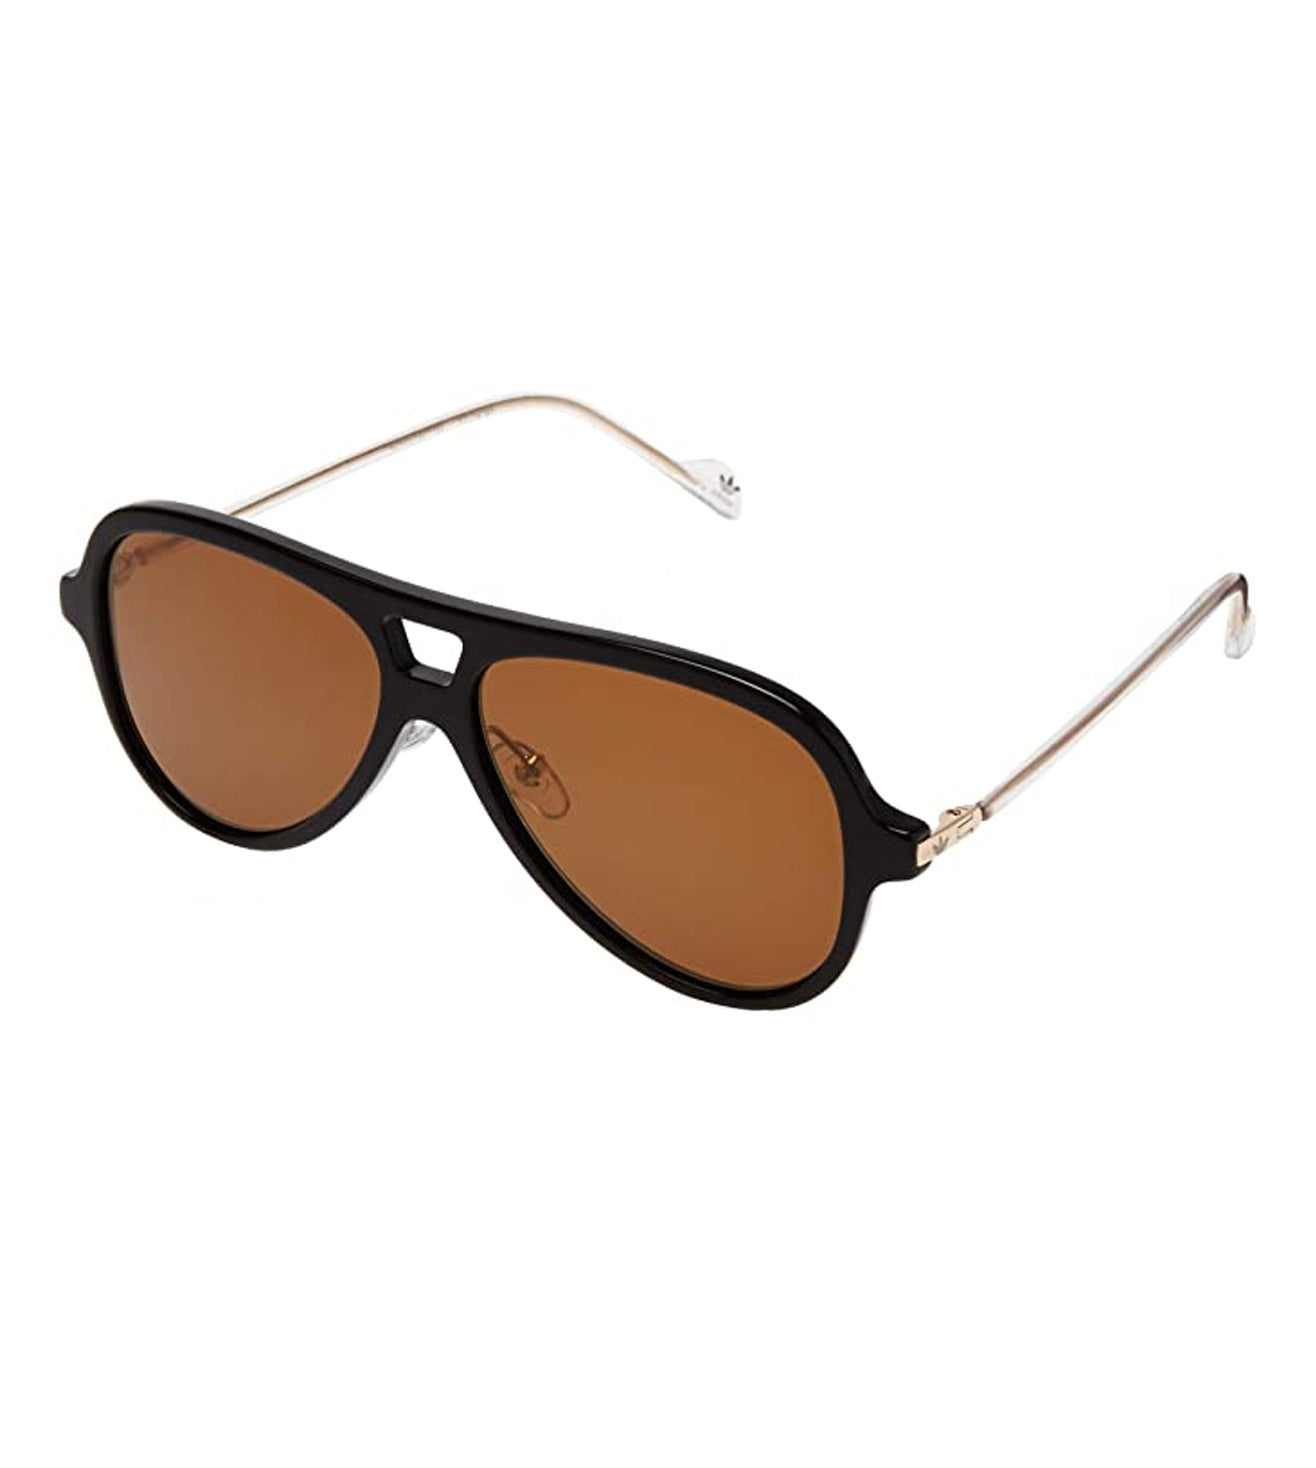 Adidas Originals Brown-Mirrored Aviator Unisex Sunglasses